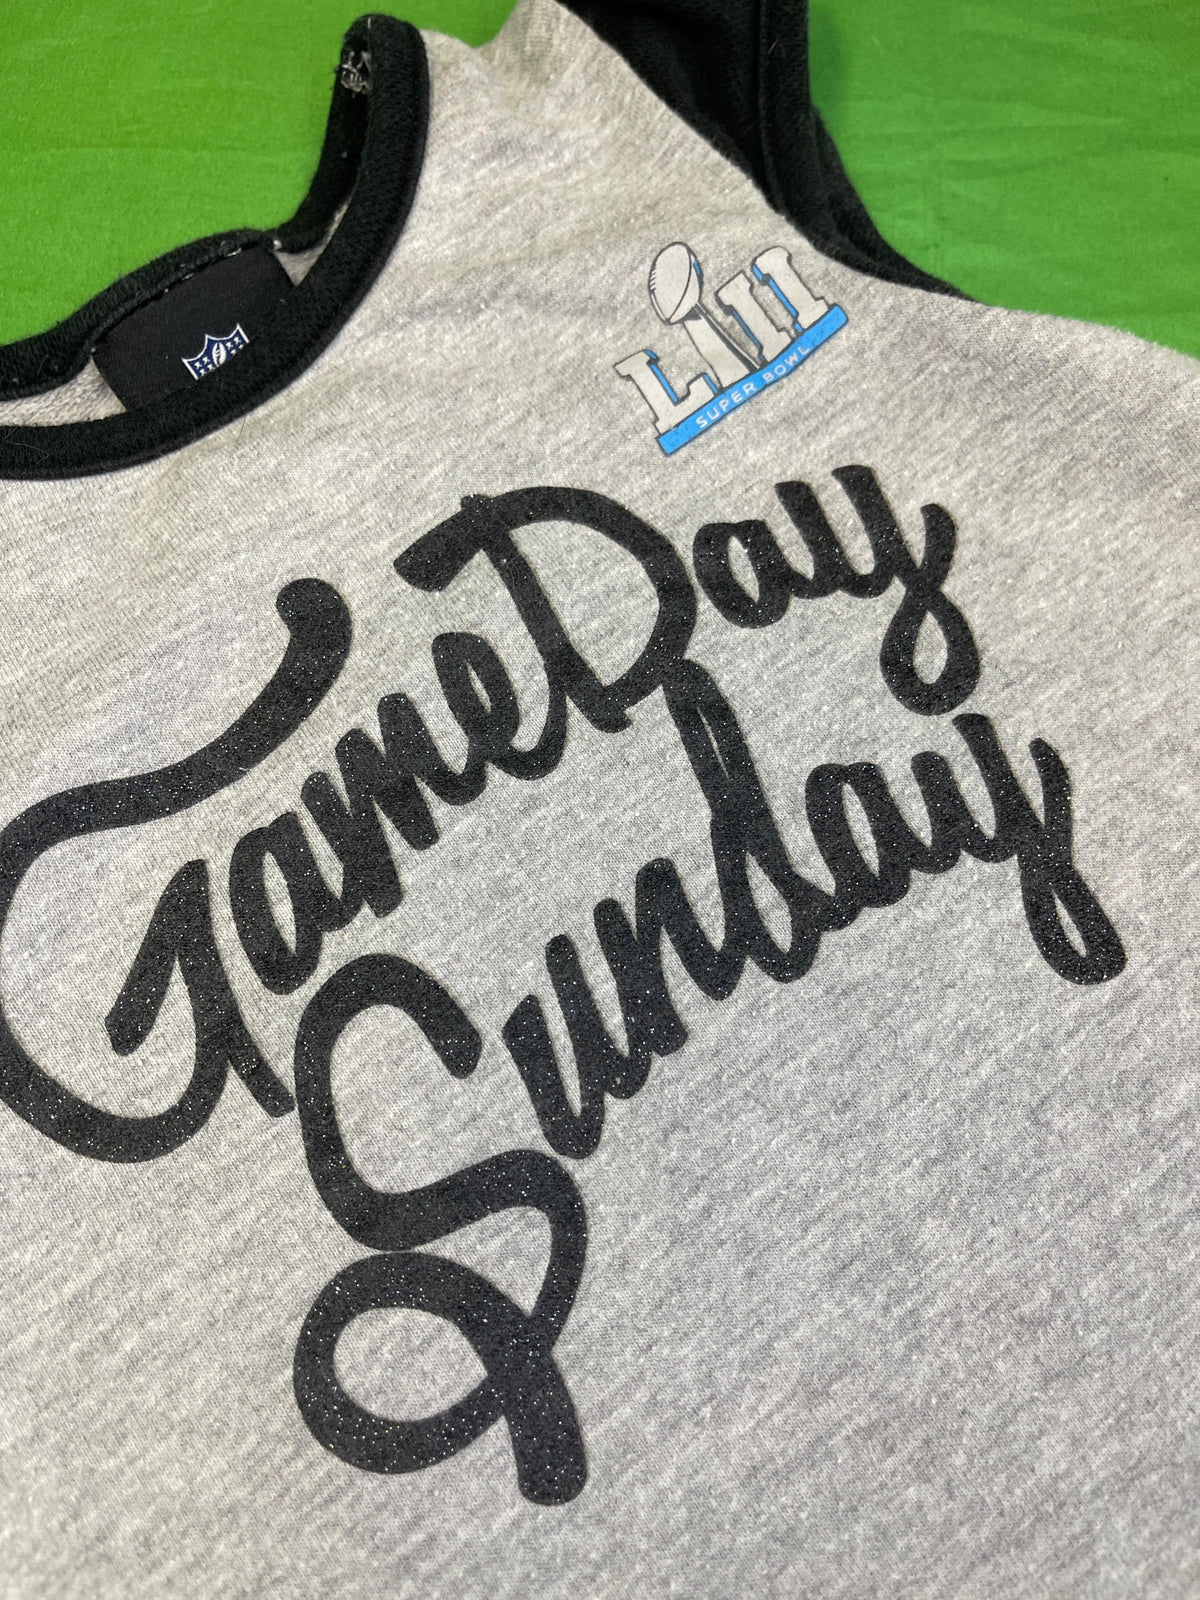 NFL Super Bowl LII "Game Day Sunday" Grey Dress Toddler 2T